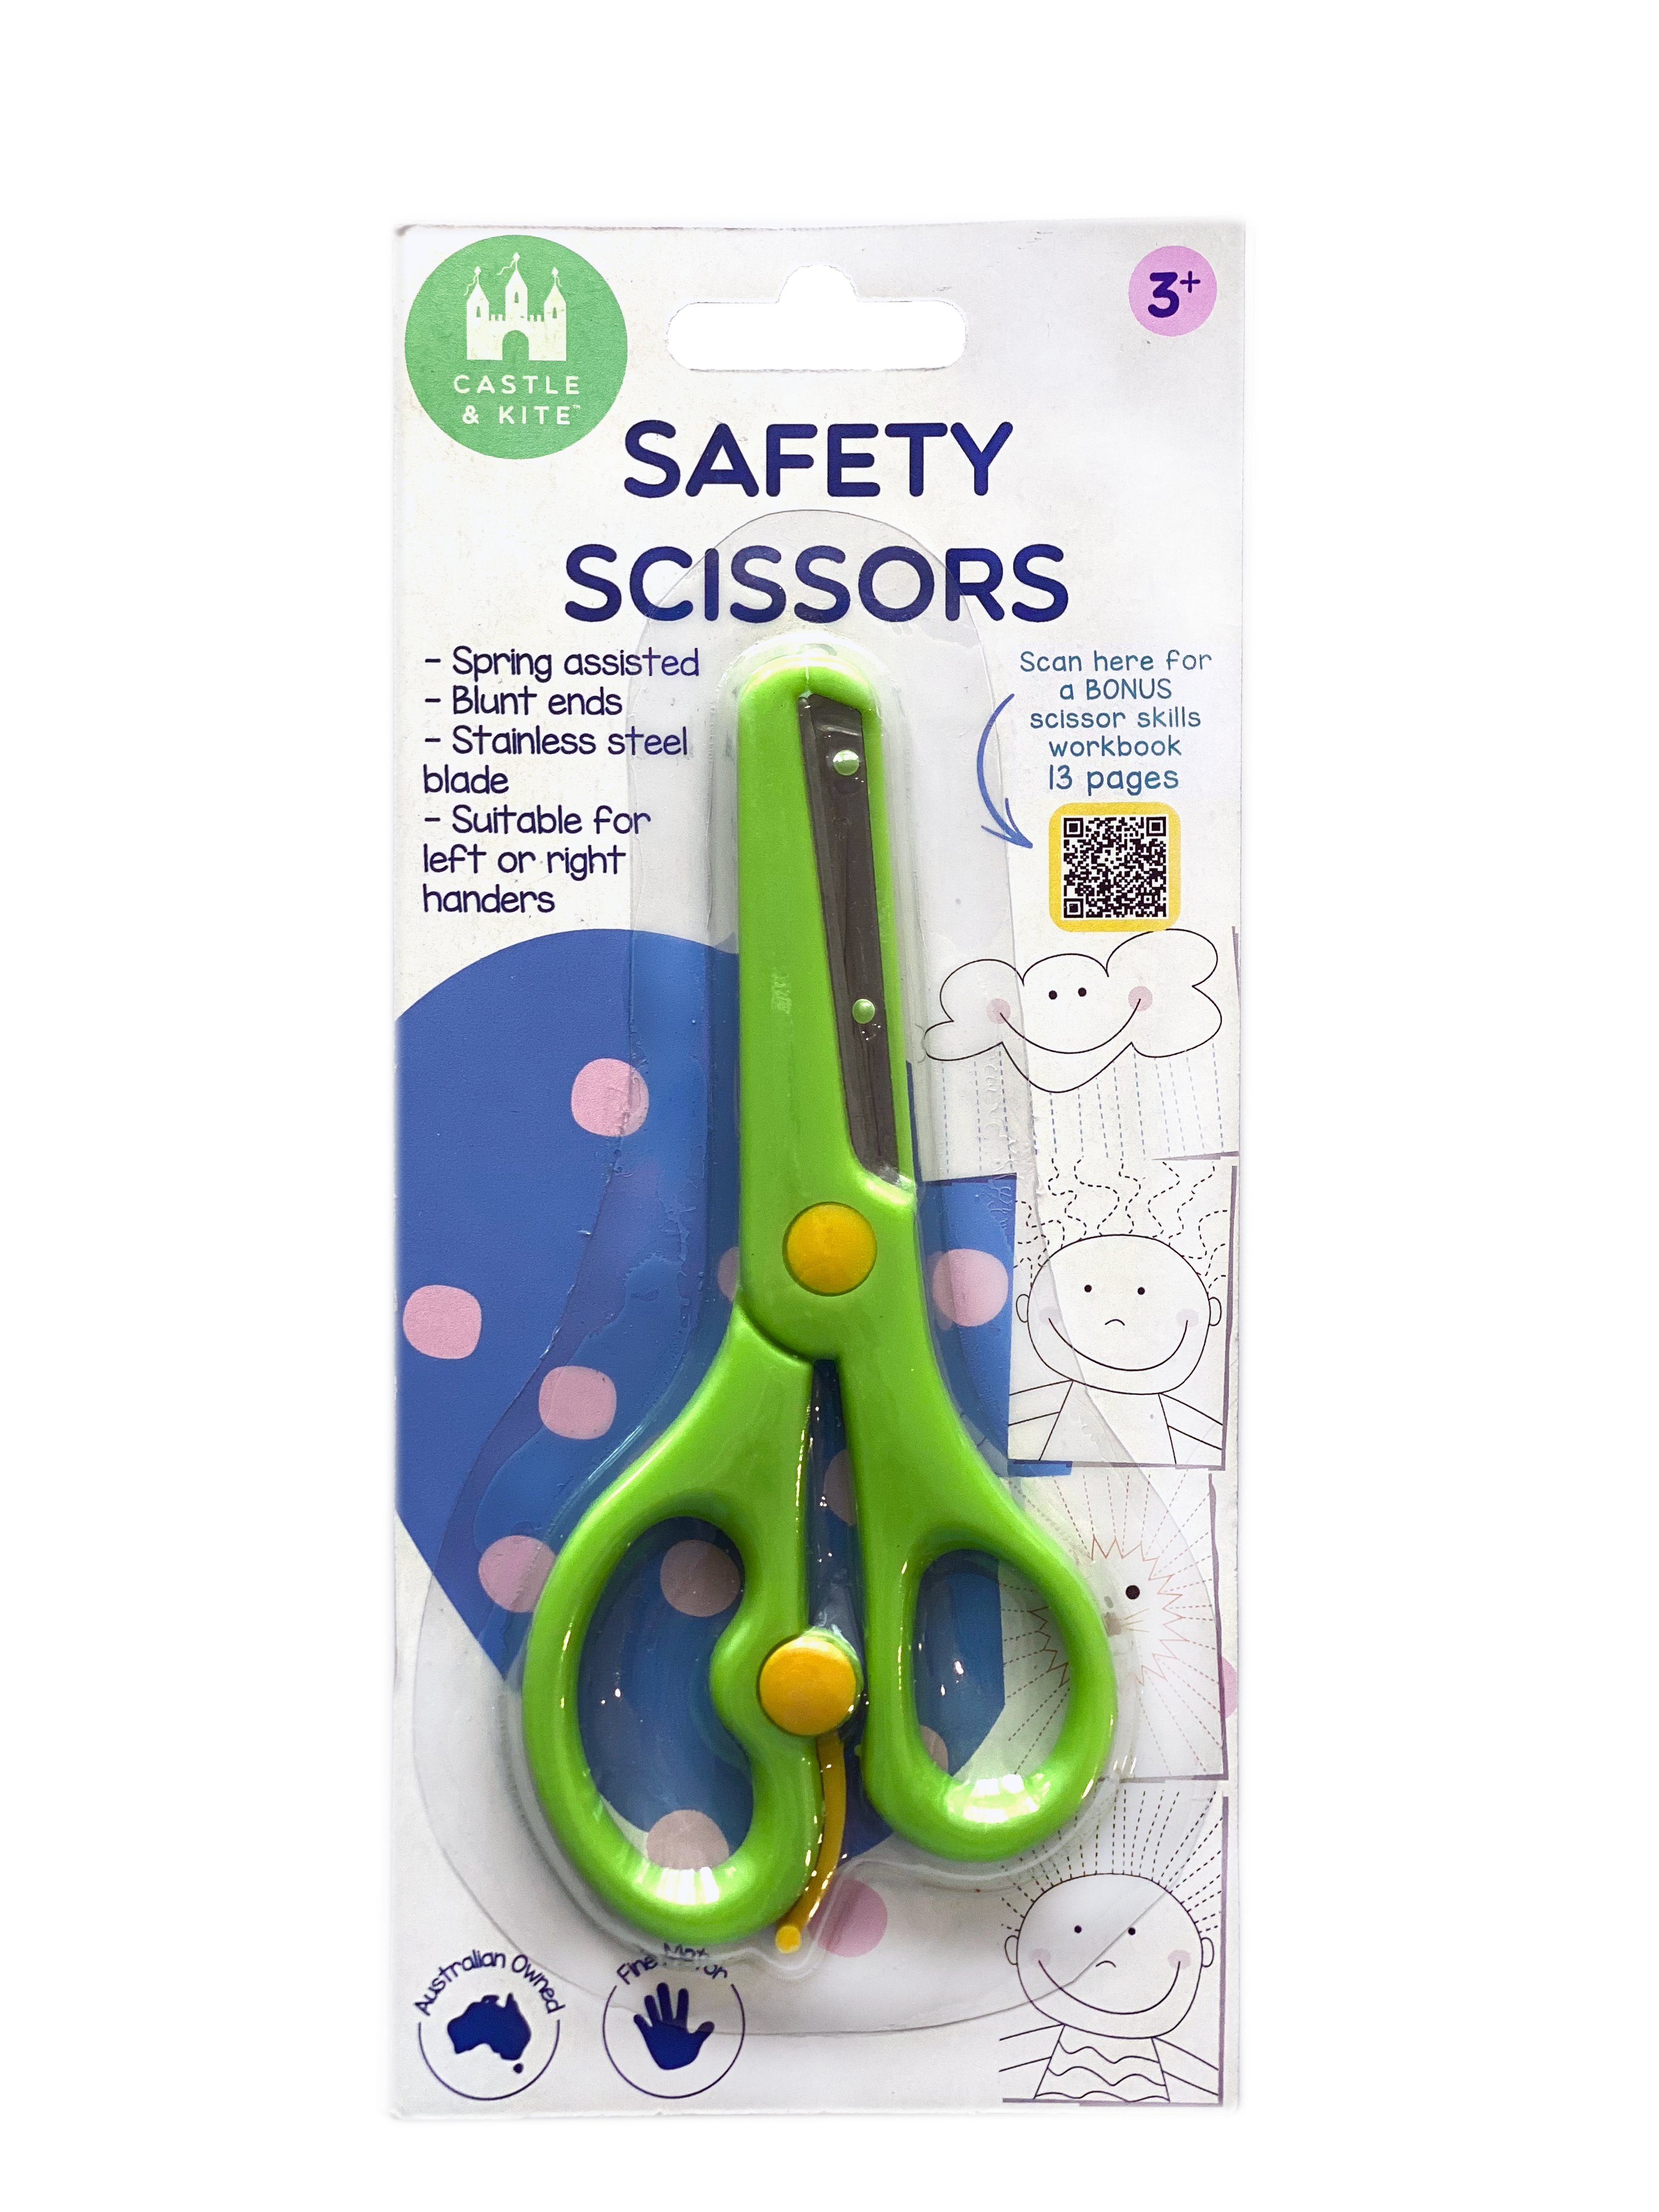 Castle &amp; Kite Safety Scissors